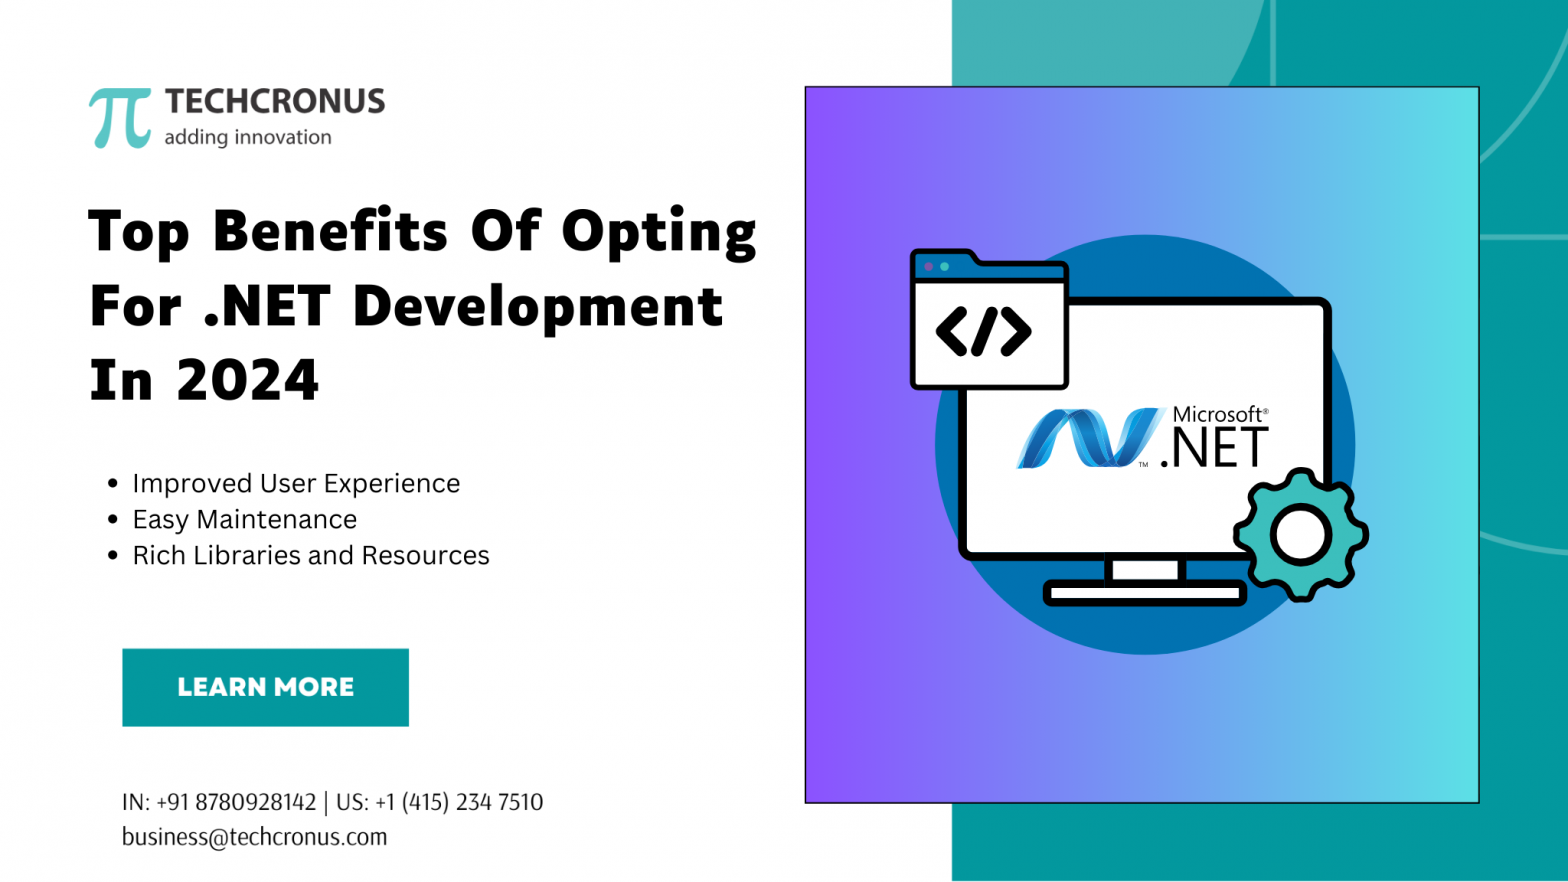 .NET Development